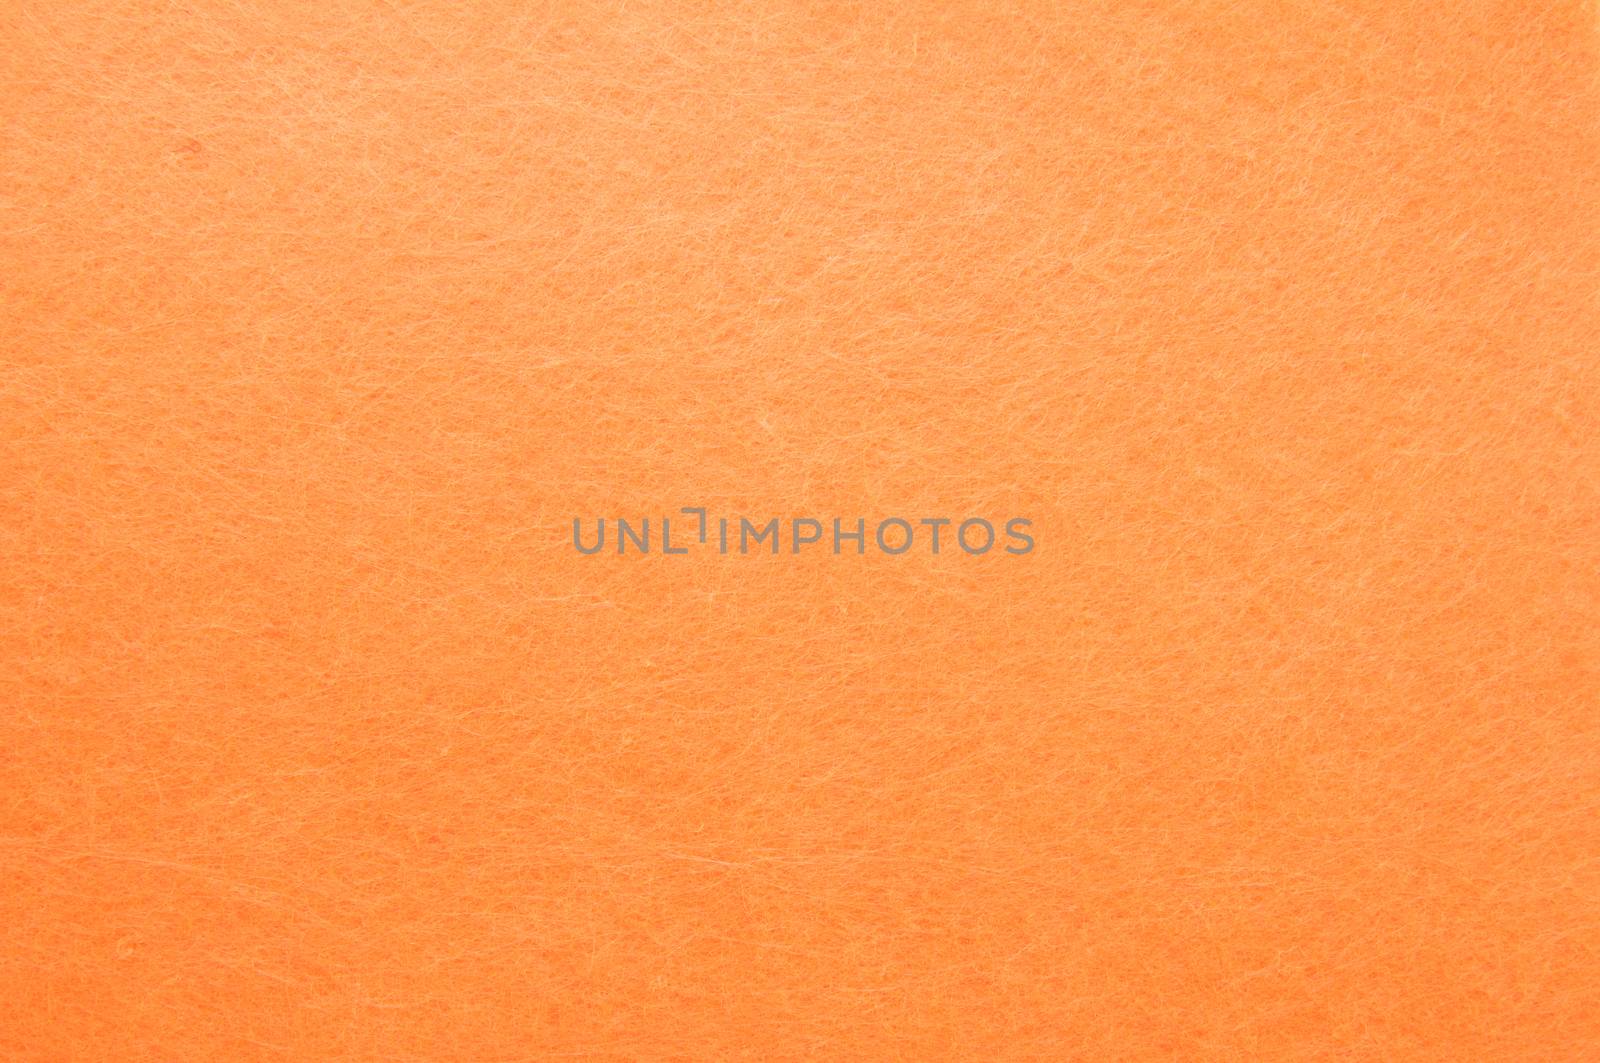 Texture background of Orange velvet or flannel as backdrop or wallpaper pattern for decoration